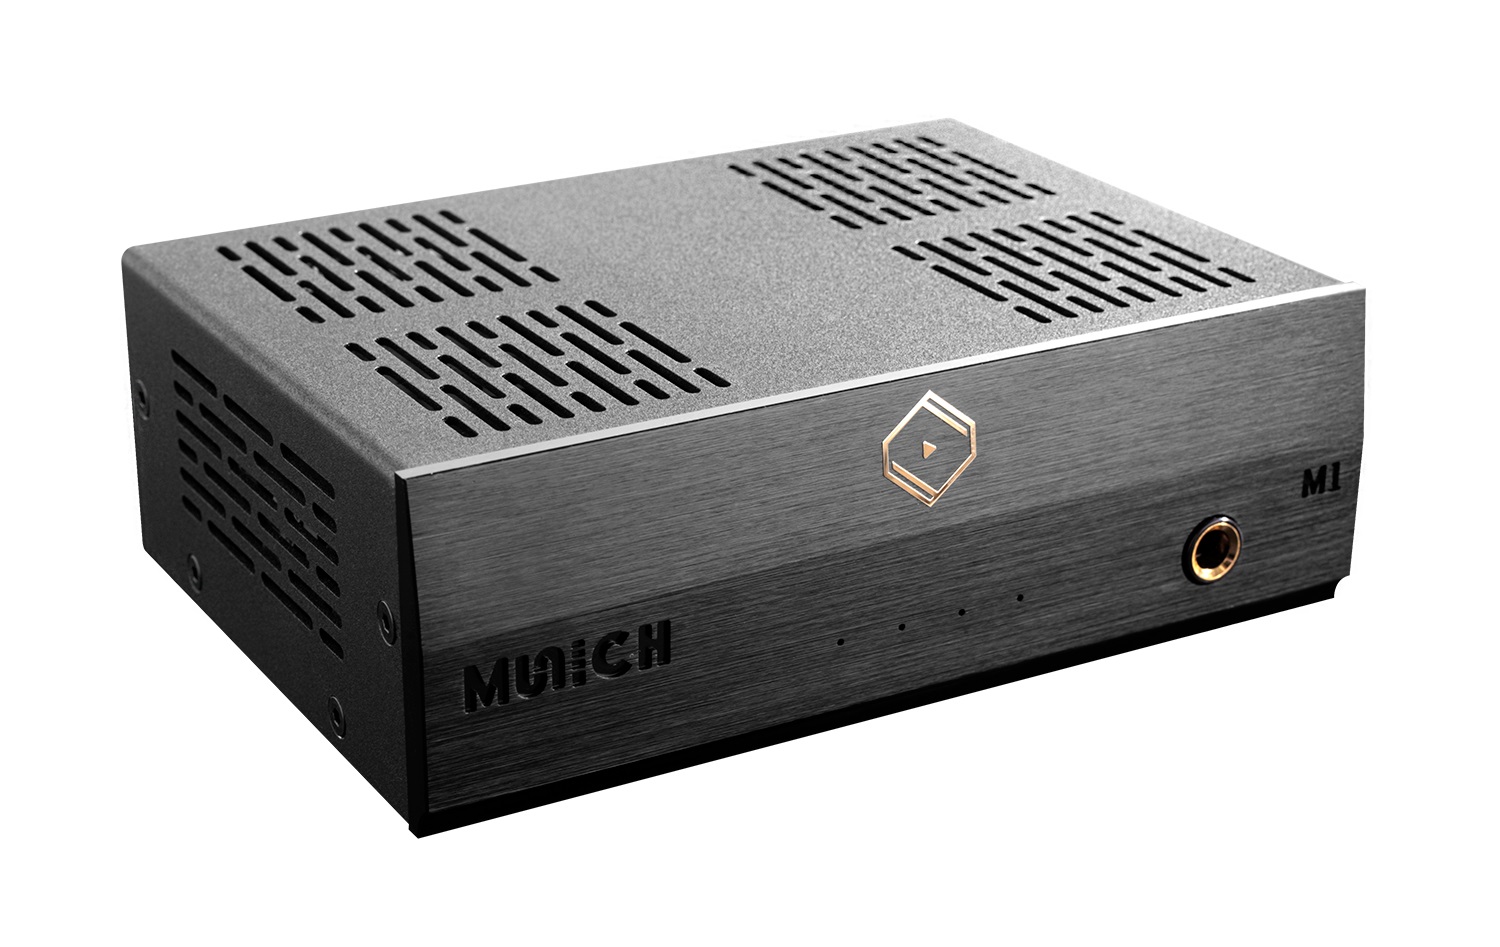 Сетевые аудио проигрыватели Silent Angel Munich M1 8 Гб сетевые аудио проигрыватели wiim mini